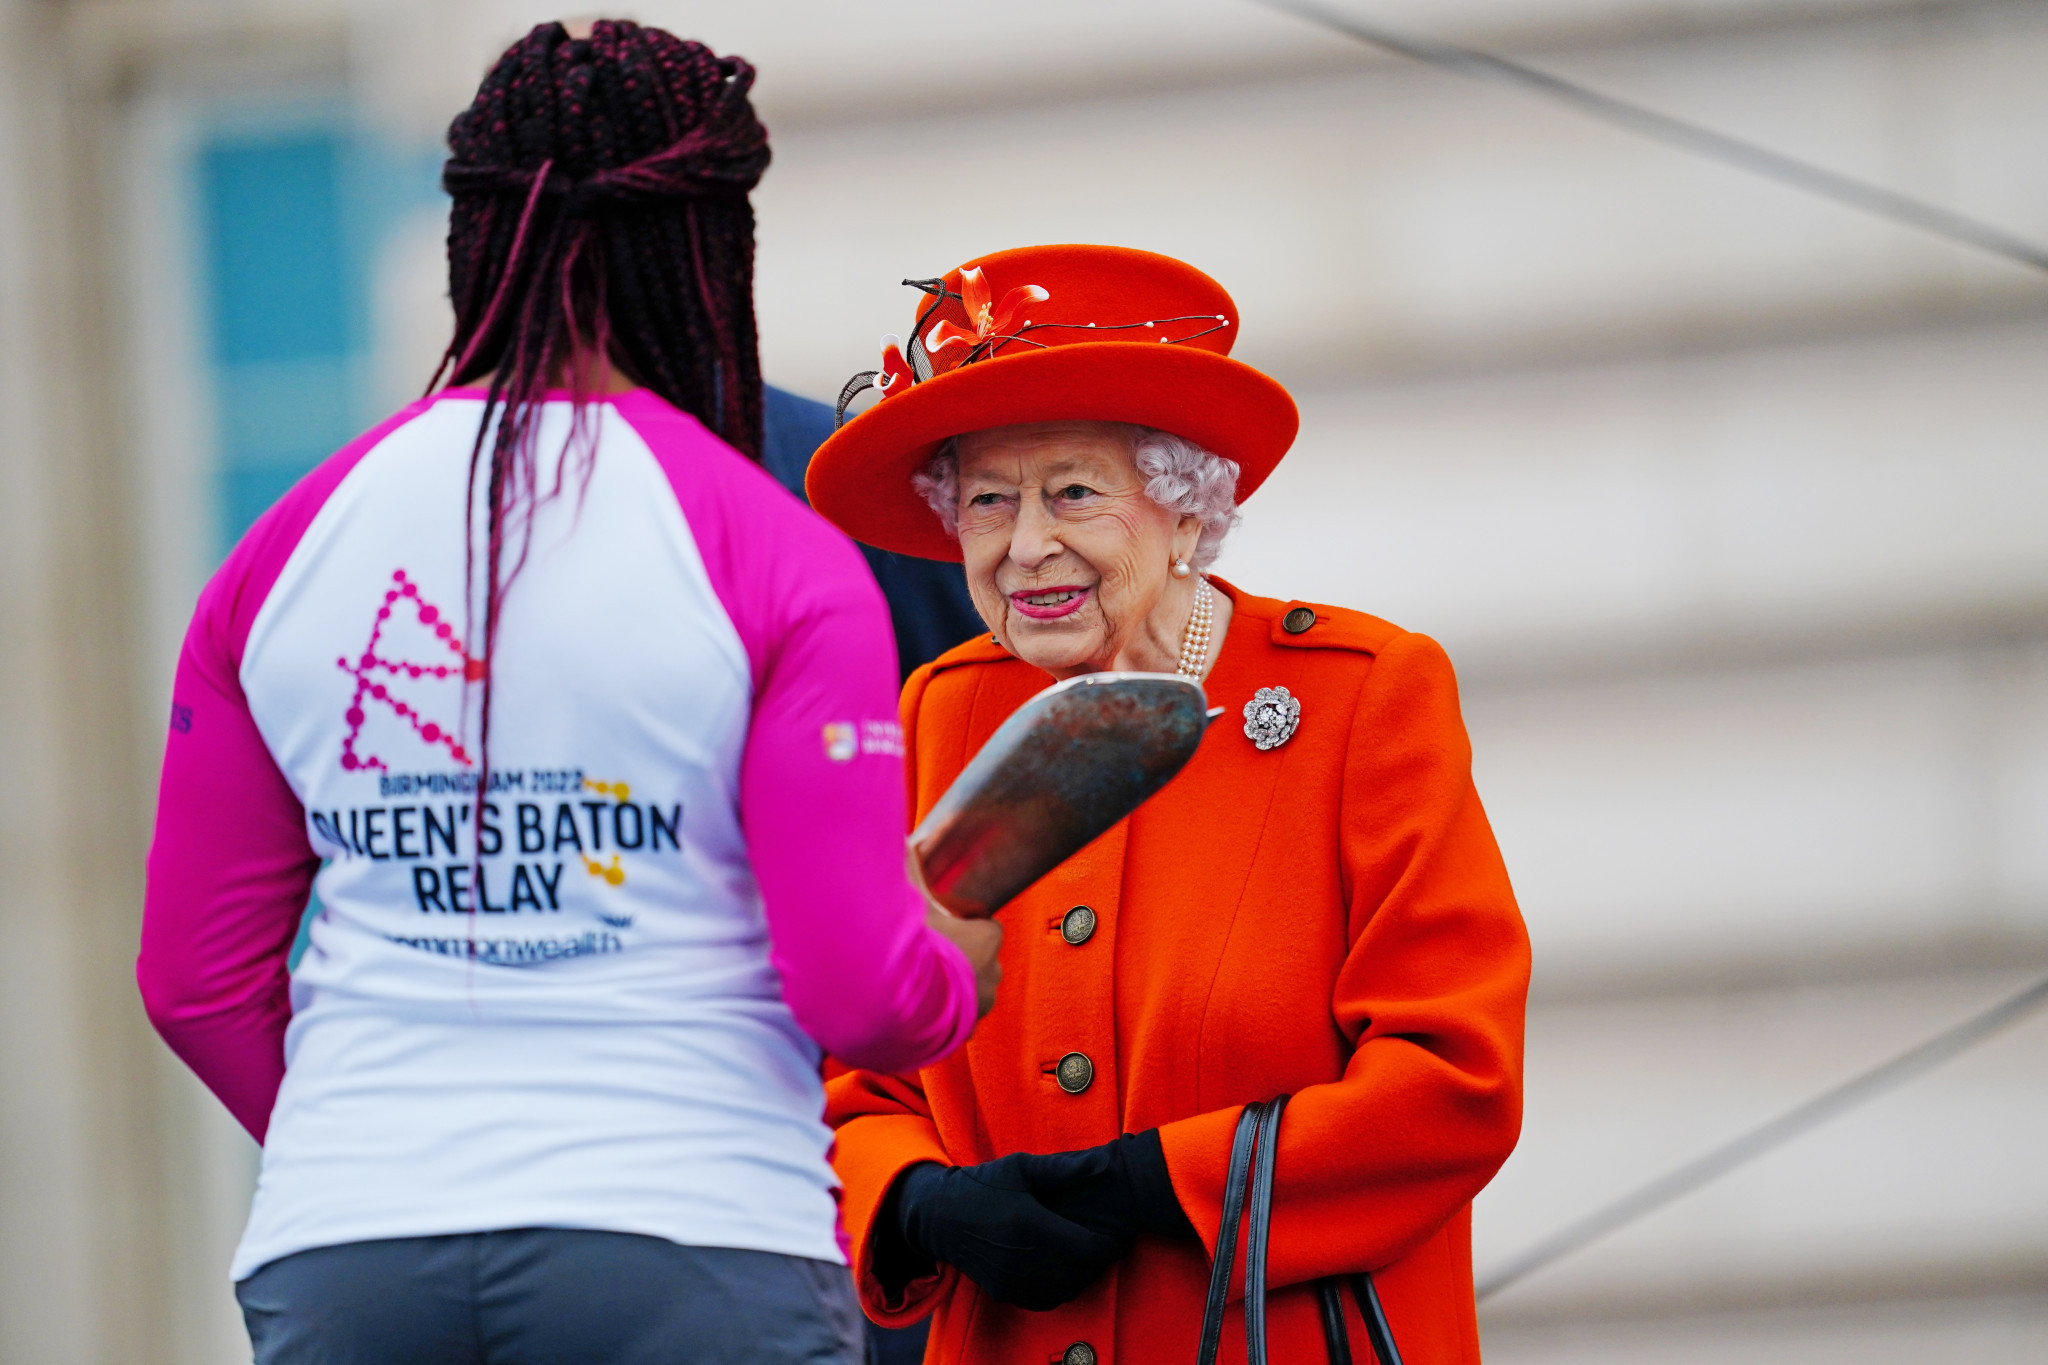 Journey of Birmingham 2022 Queen's Baton through London to mark Platinum Jubilee revealed